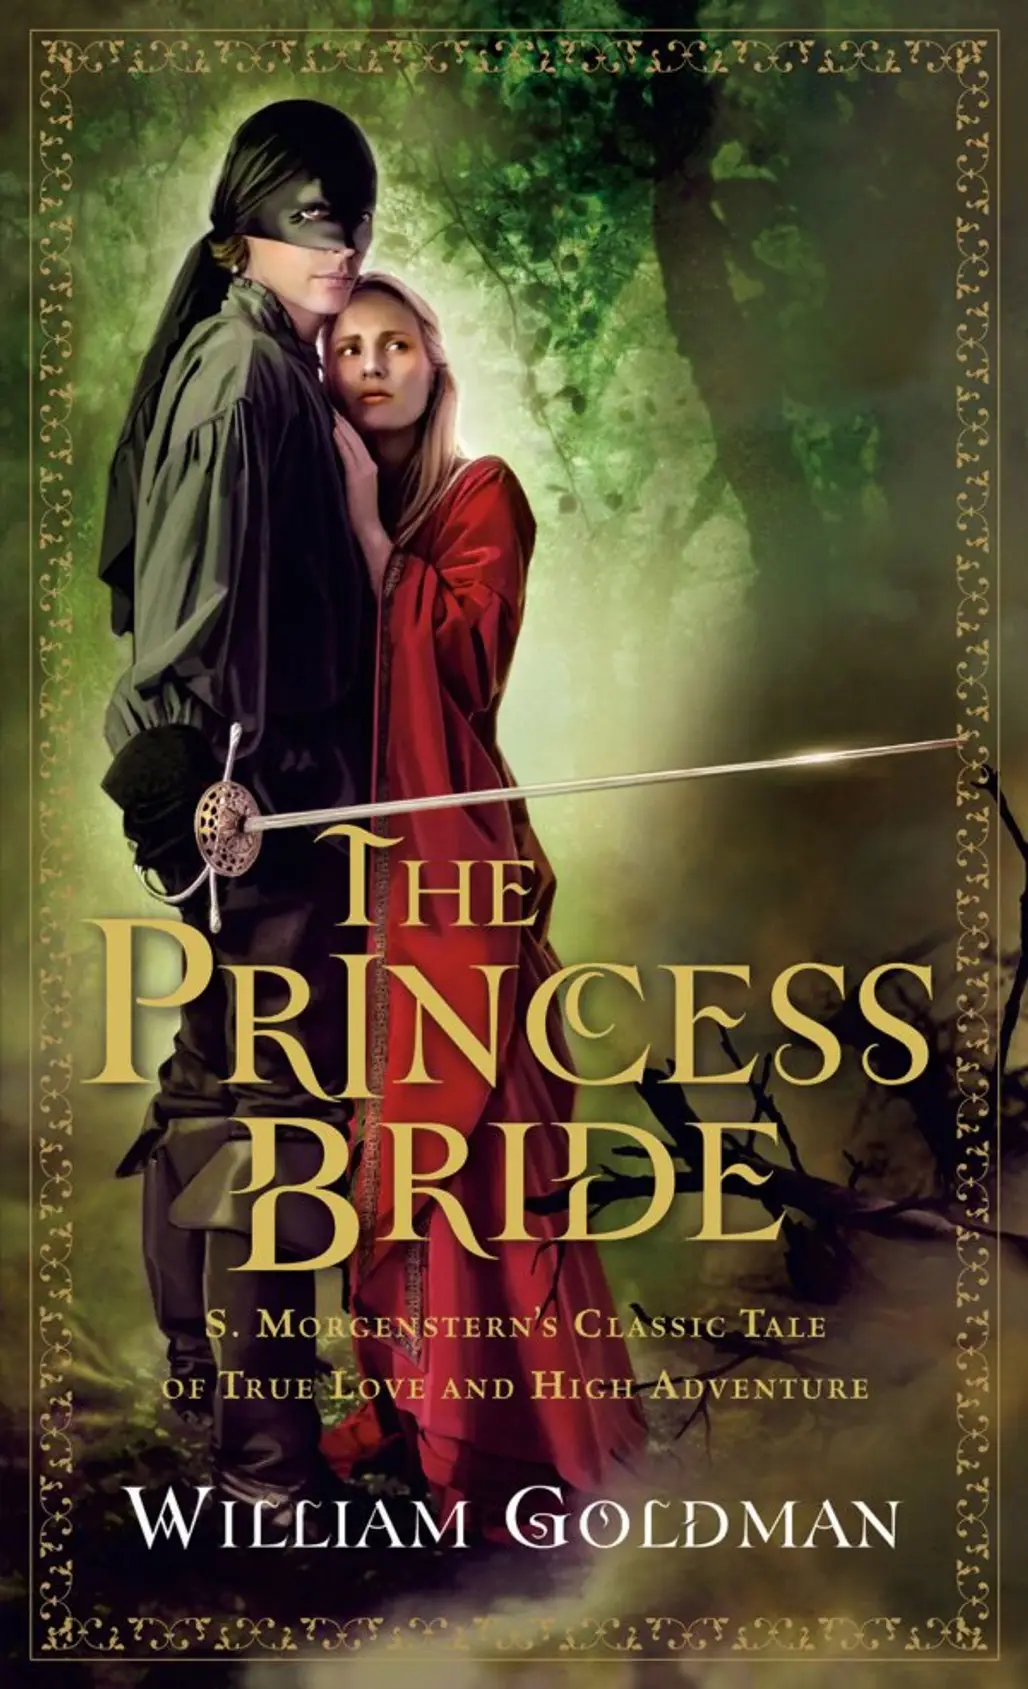 'the Princess Bride' by William Goldman